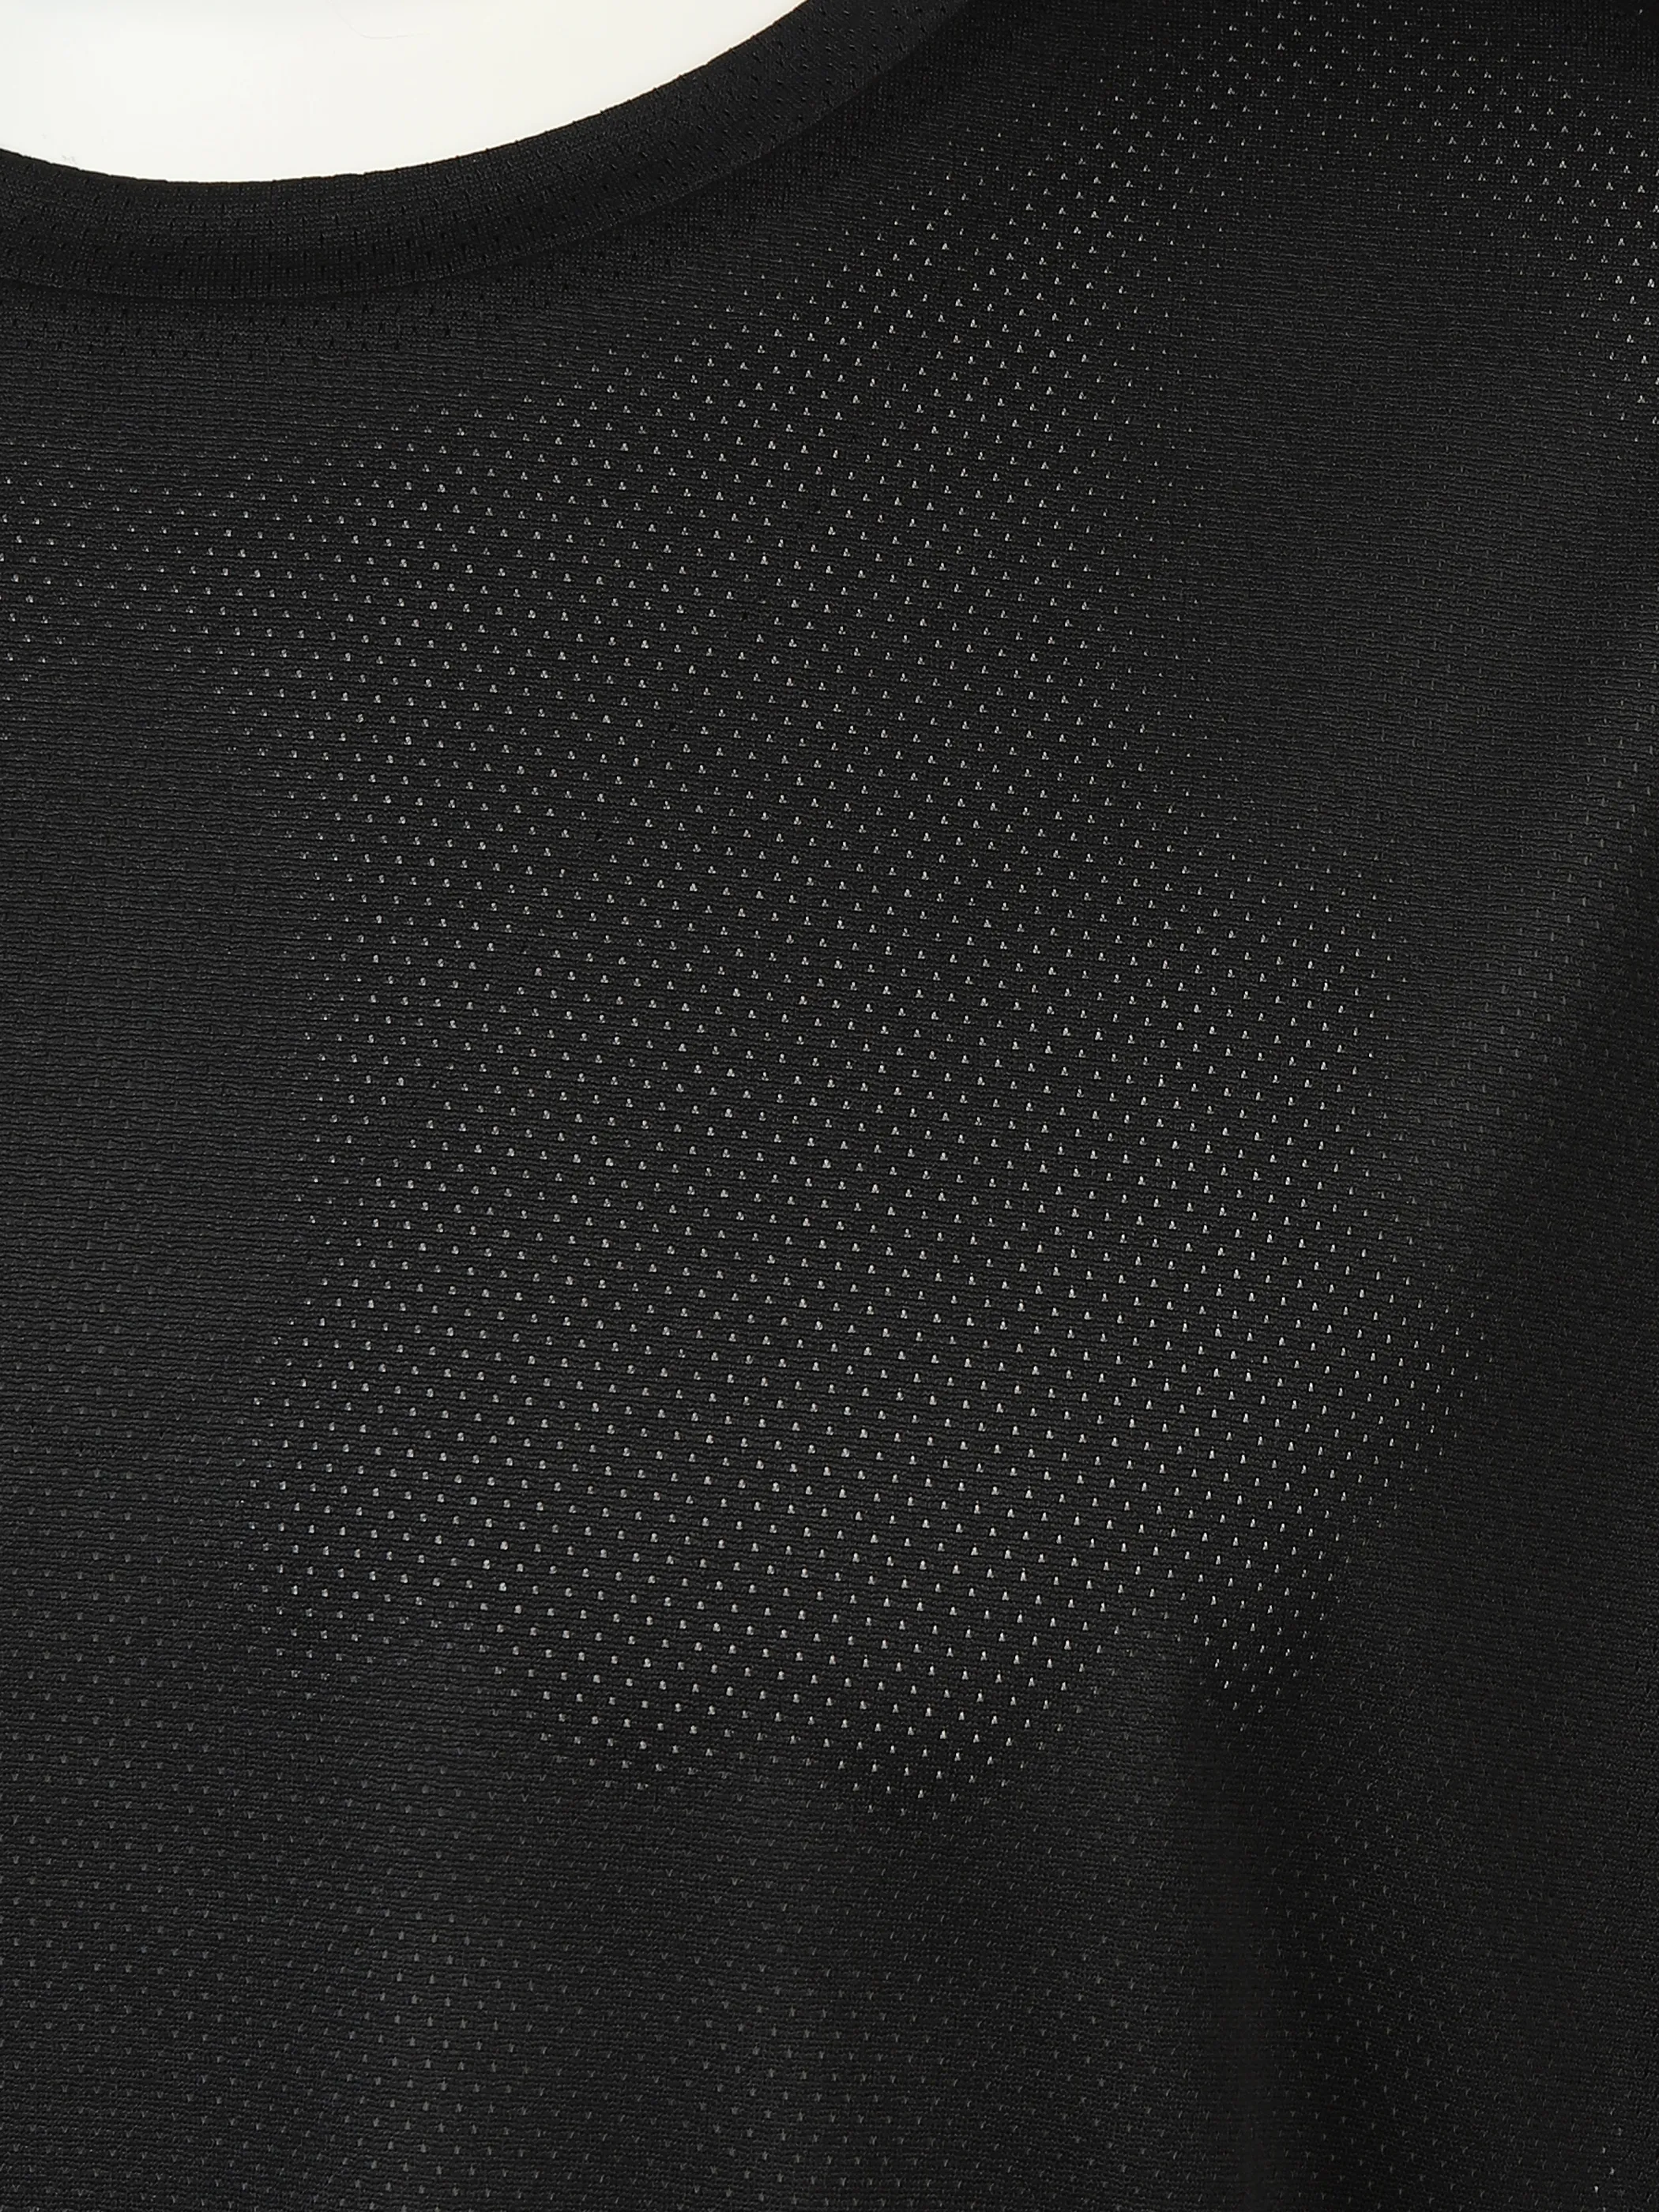 Grinario Sports He- Sport T-Shirt Schwarz 890157 BLACK 3